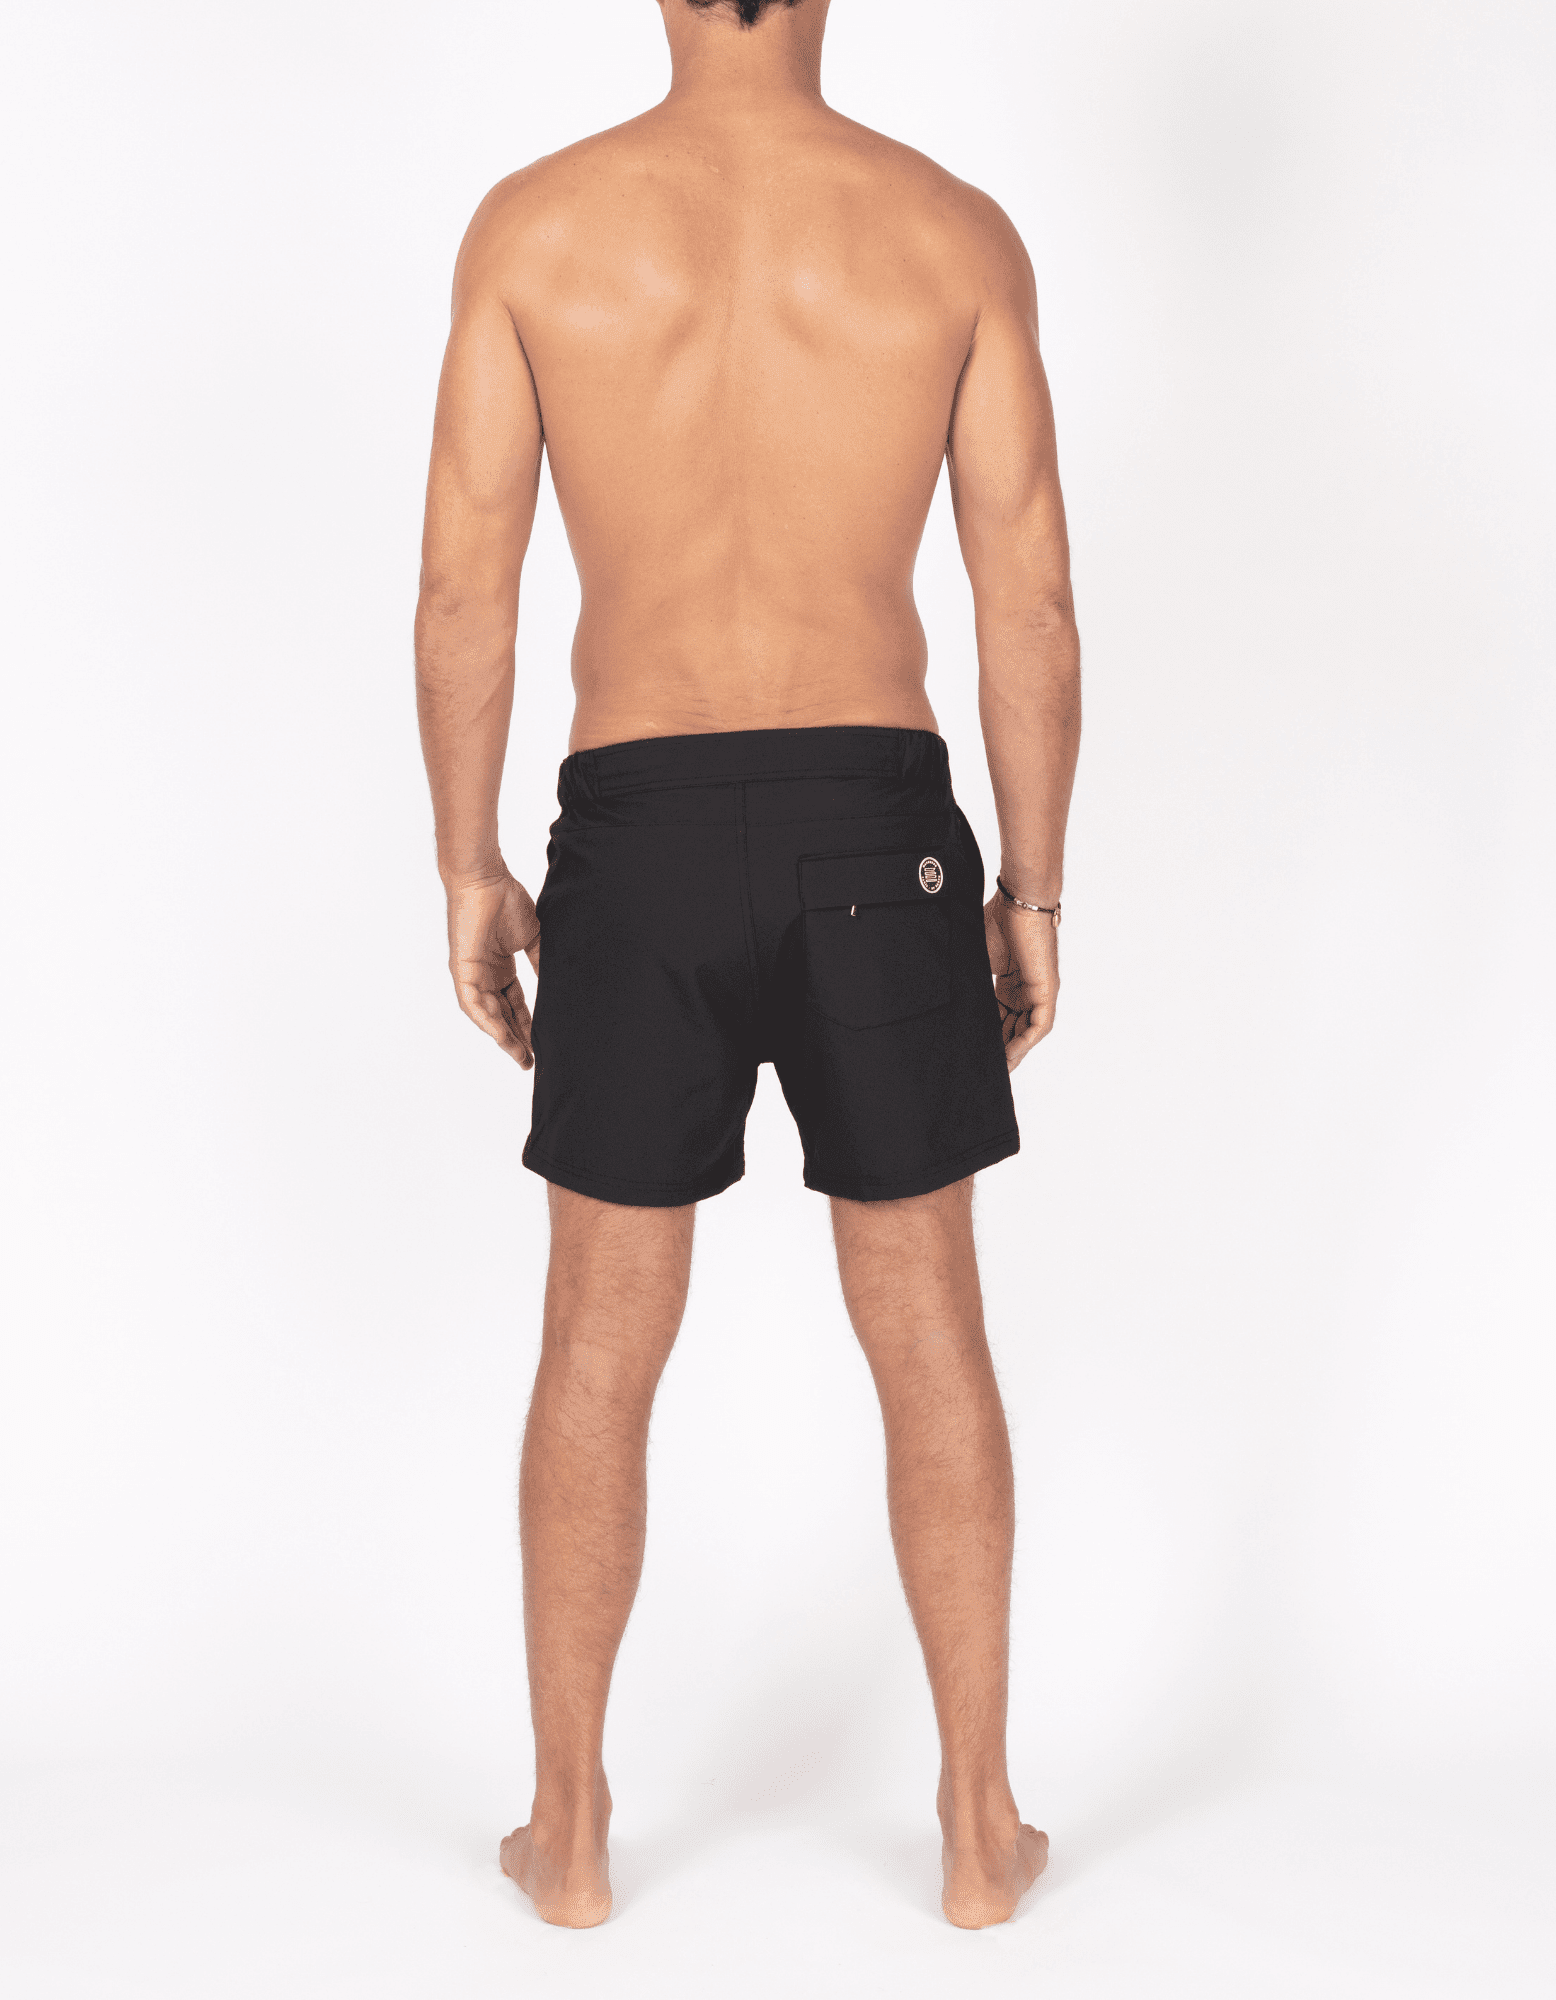 Gize - 00. Black Swim Shorts - Gize MACKEENE 